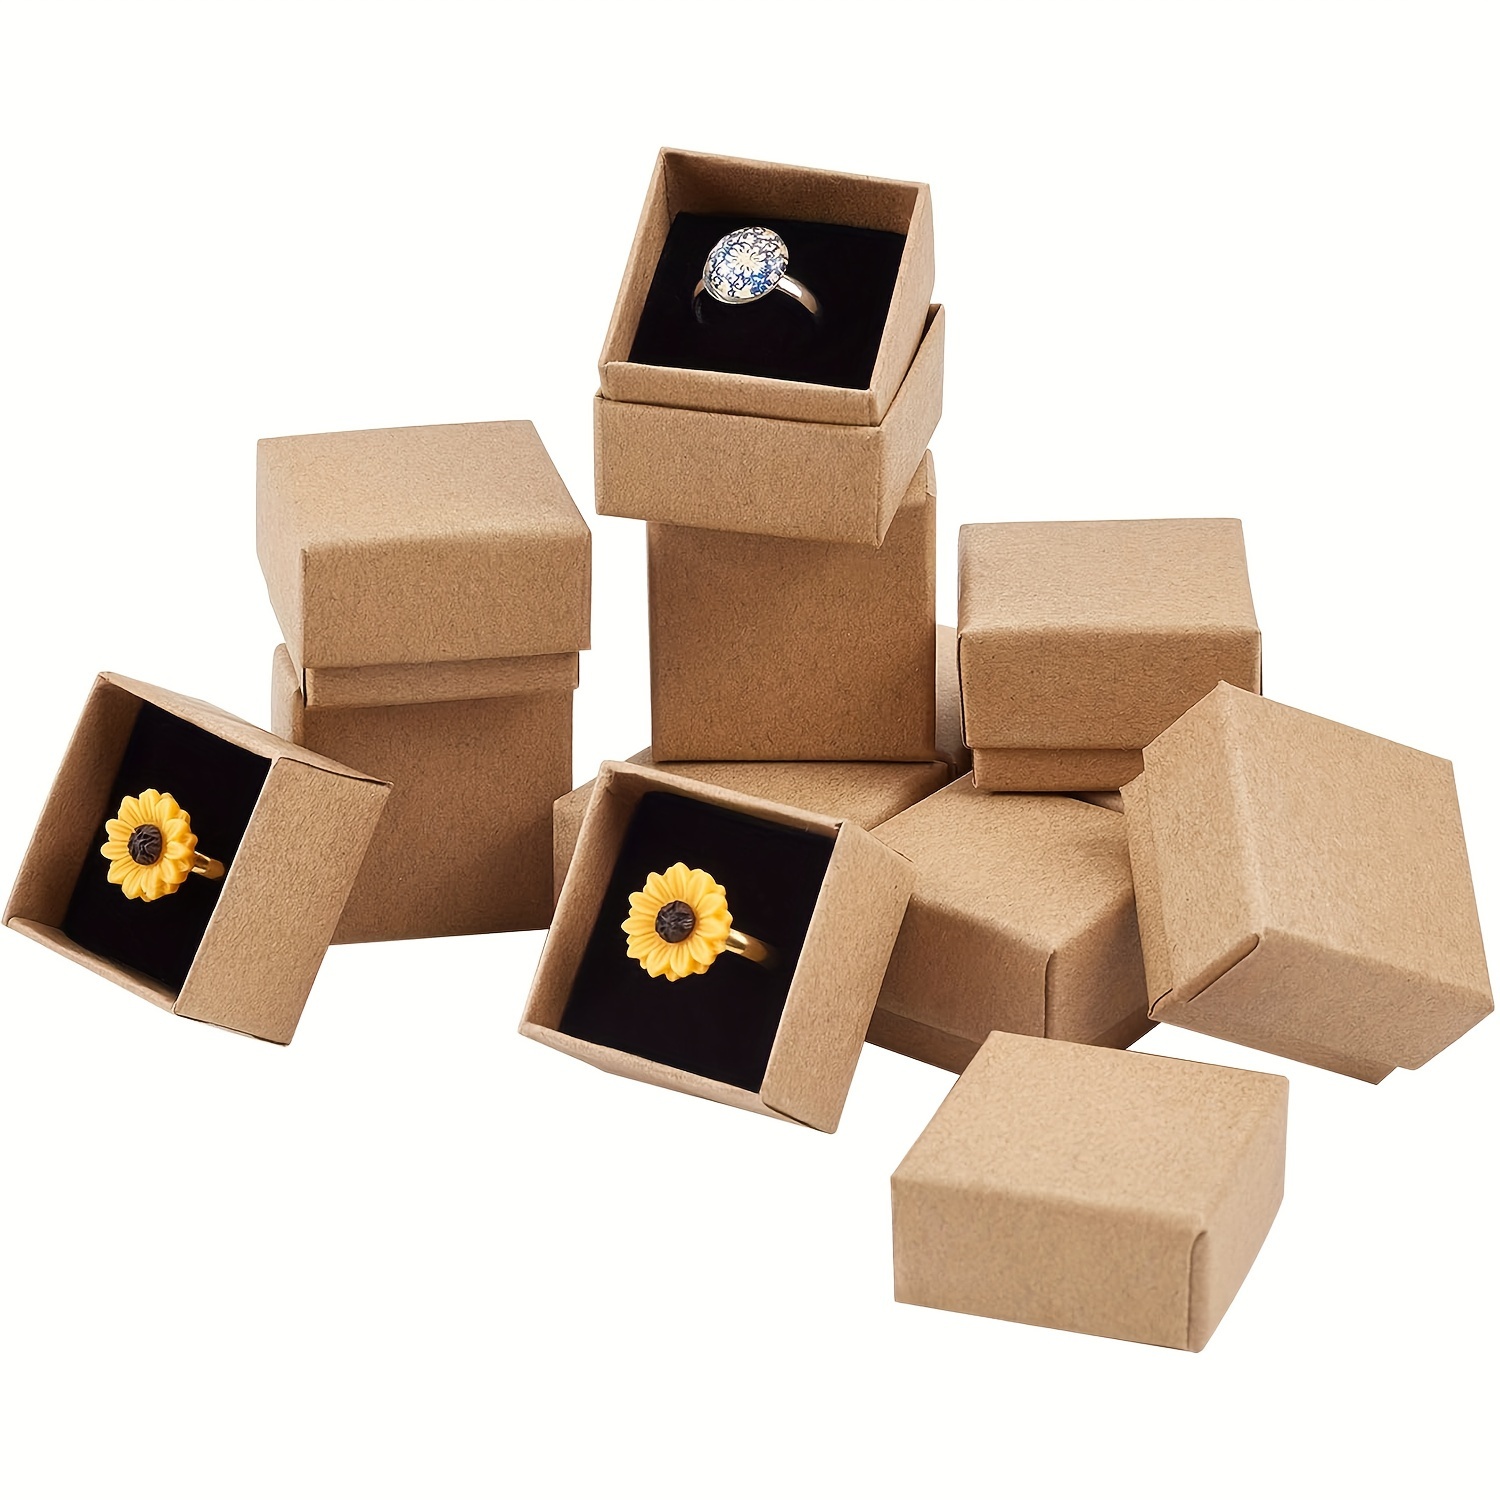 Styrofoam Box FB 05 - ID:480mmLx330mmWx175mmH - Packaging Partner You Trust